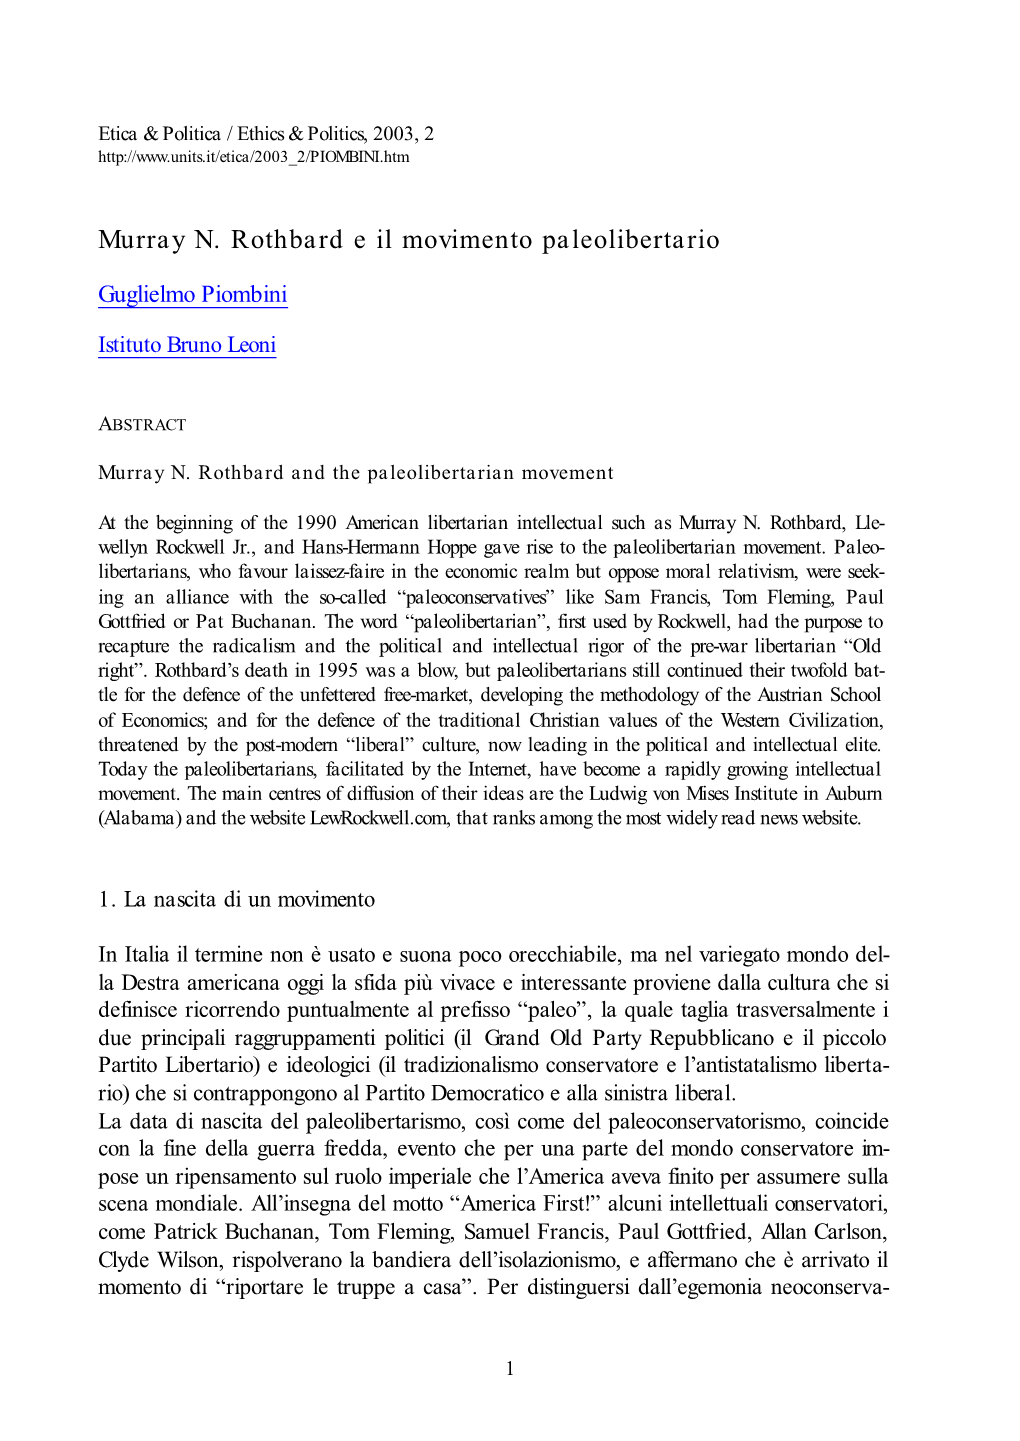 Murray N. Rothbard E Il Movimento Paleolibertario